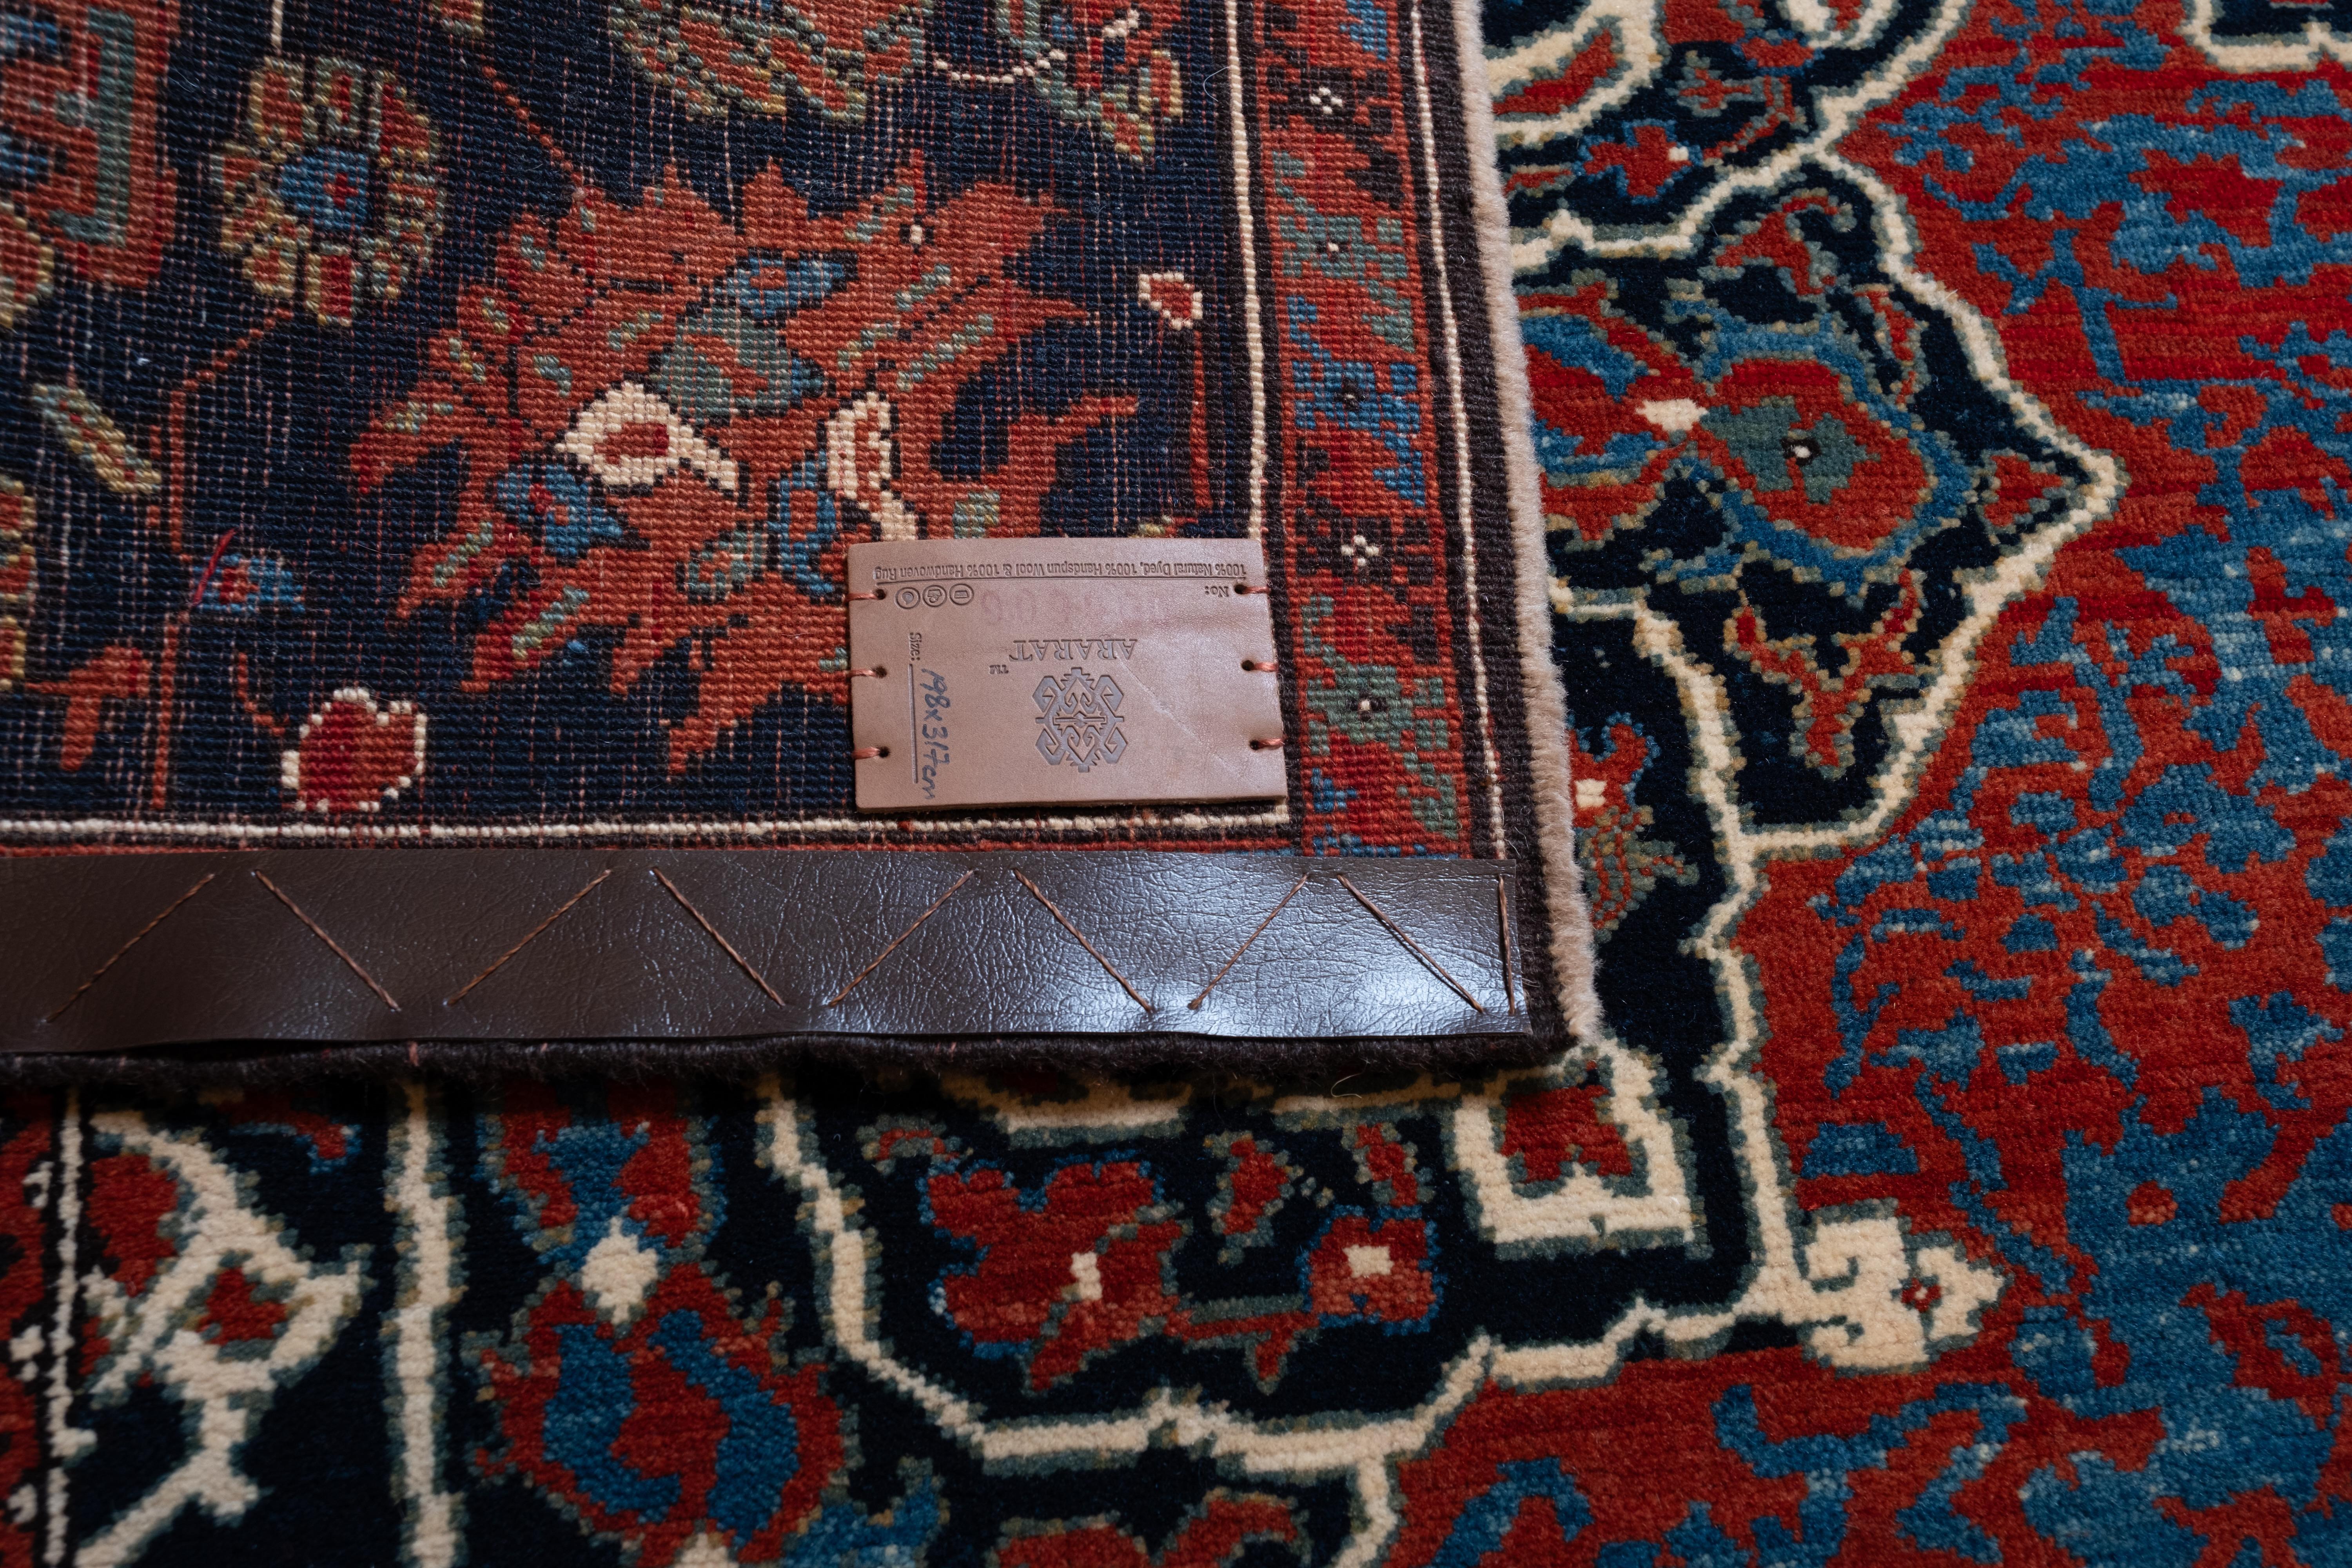 Ararat Rugs Medallion Ushak Carpet Museum Piece 17th C. Revival Rug Natural Dyed For Sale 1